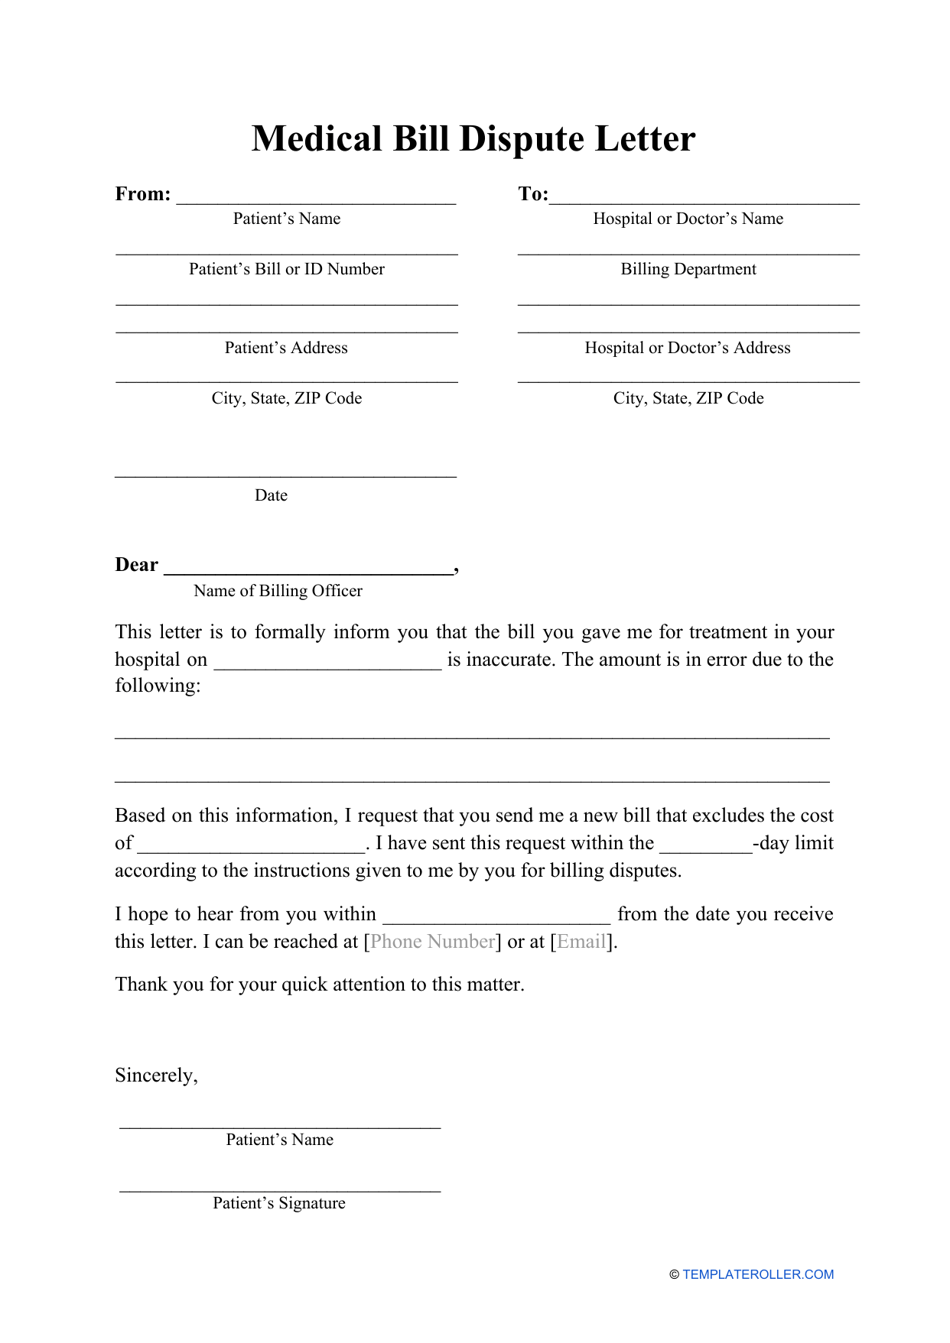 Medical Bill Dispute Letter Template Download Printable PDF In Credit Dispute Letter Template